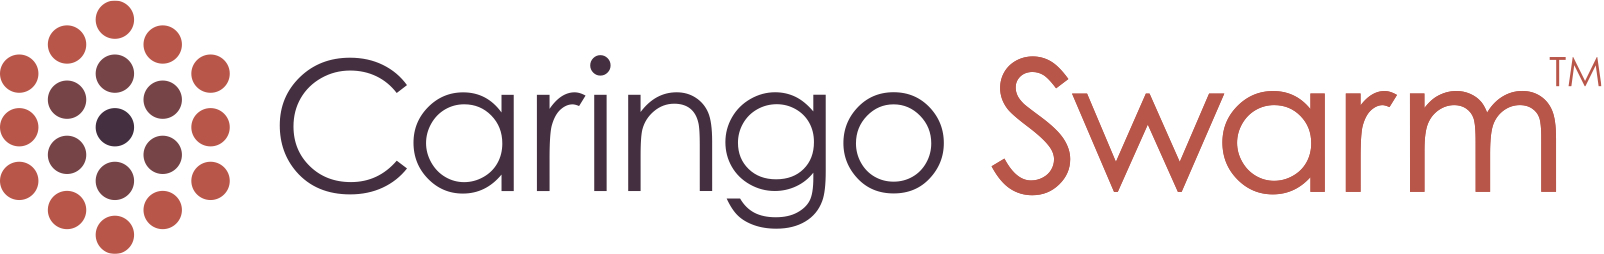 caringo-swarm-logo